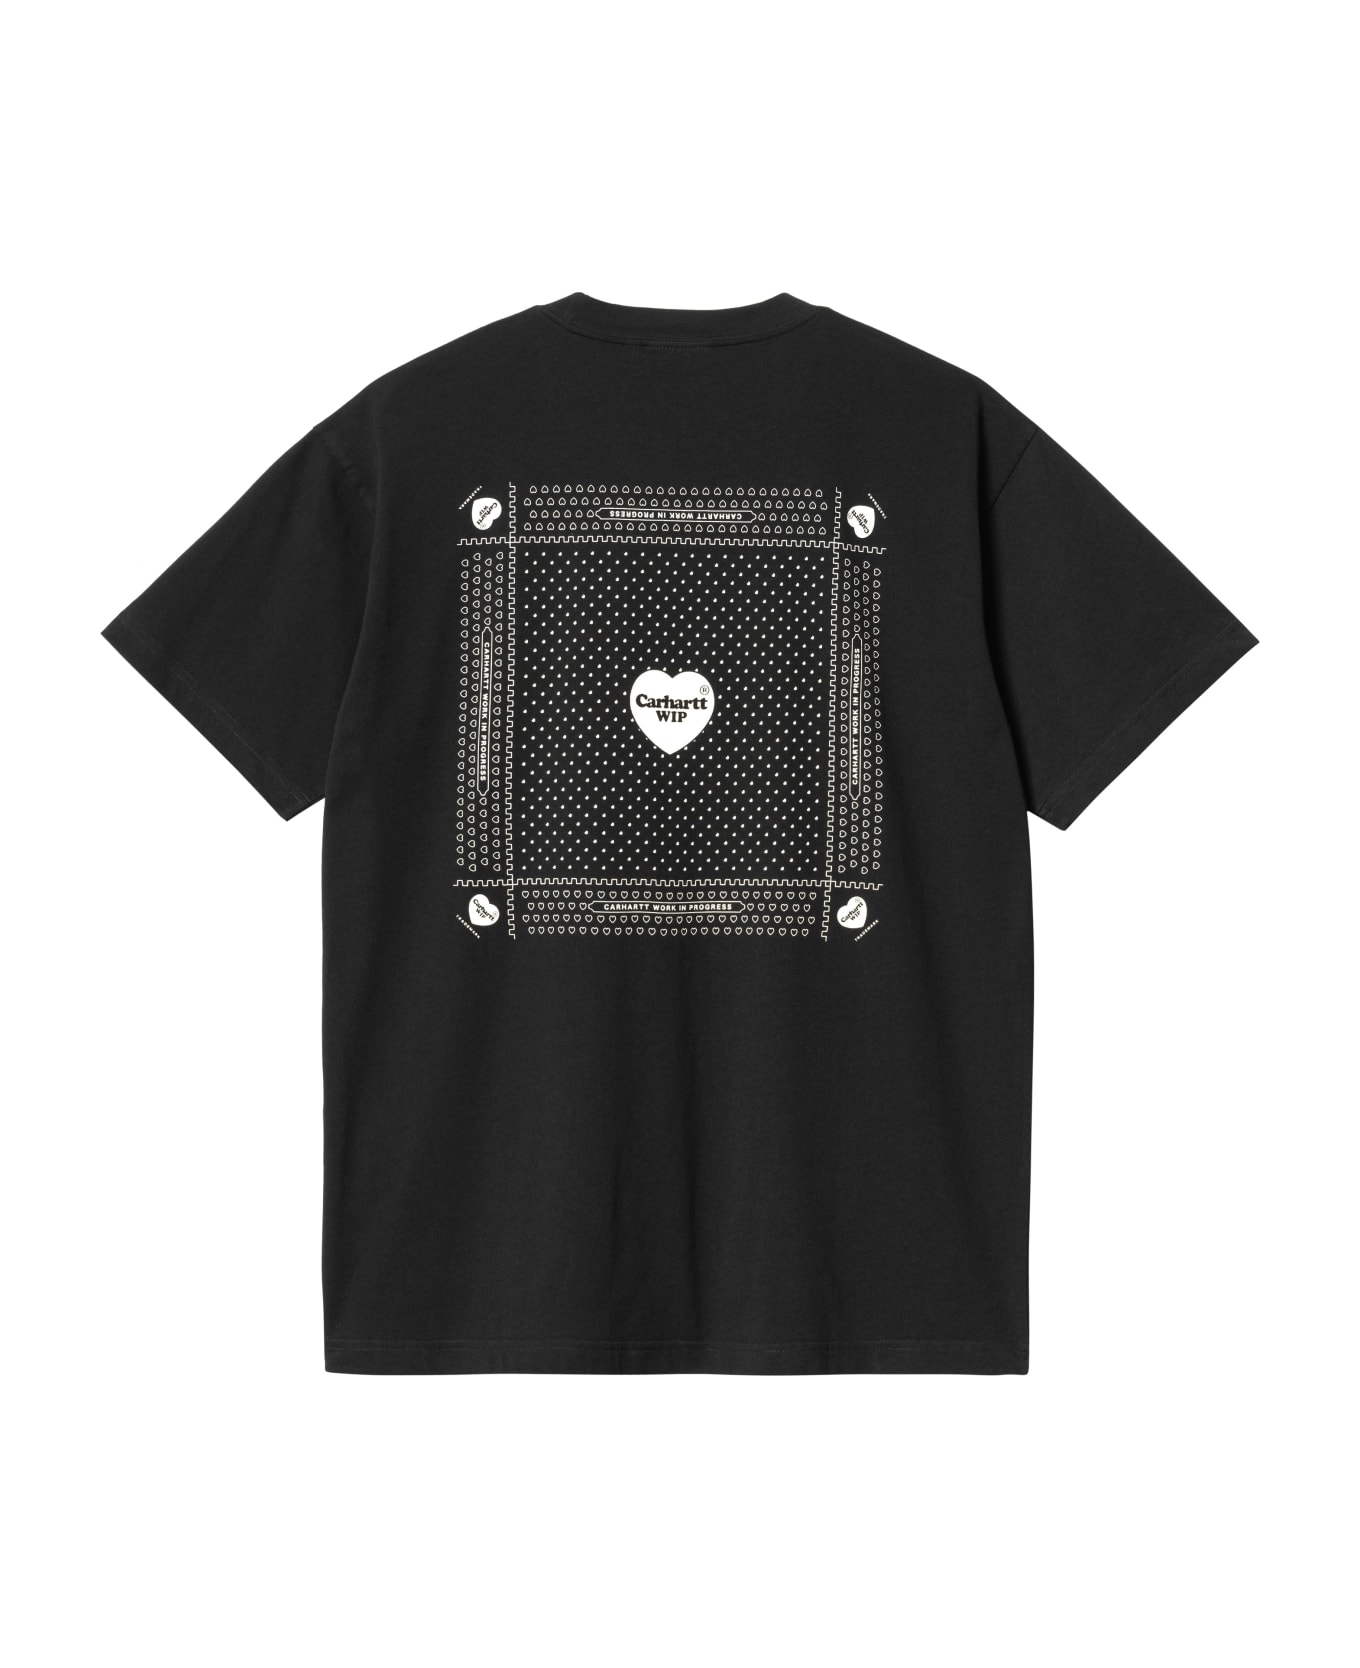 Carhartt S S Heart Bandana T-shirt - Black White